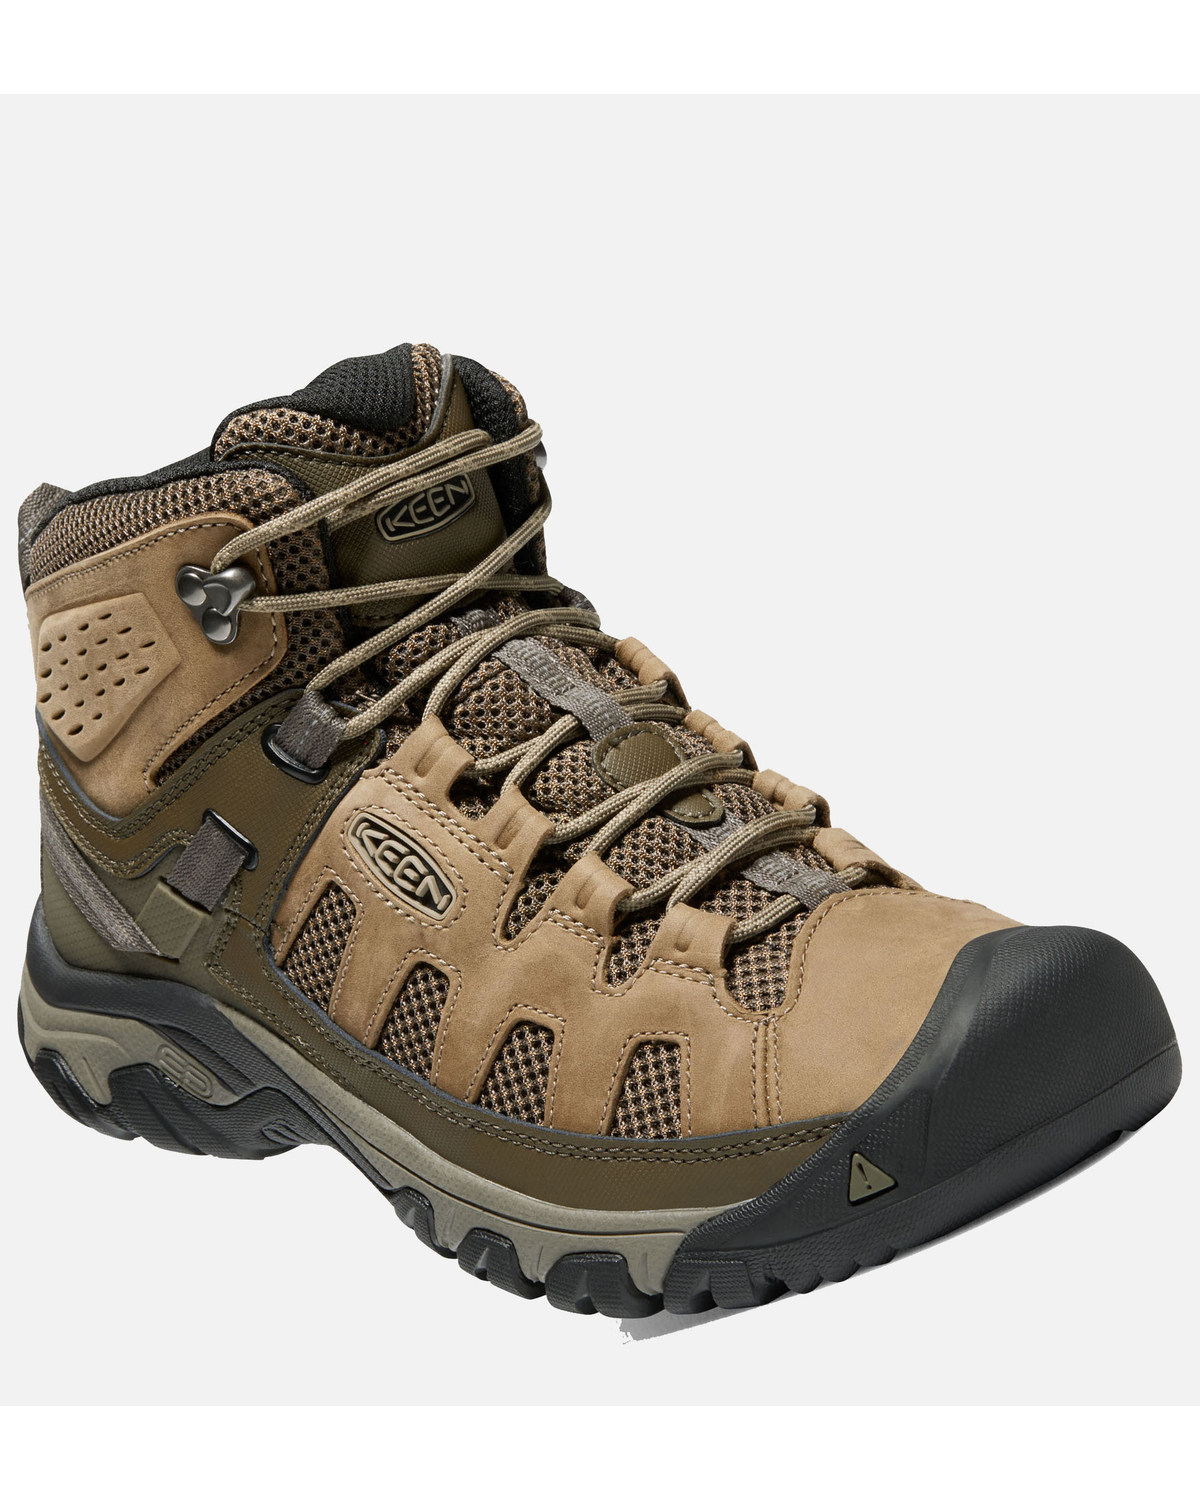 Keen Men's Targhee Vent Hiking Boots